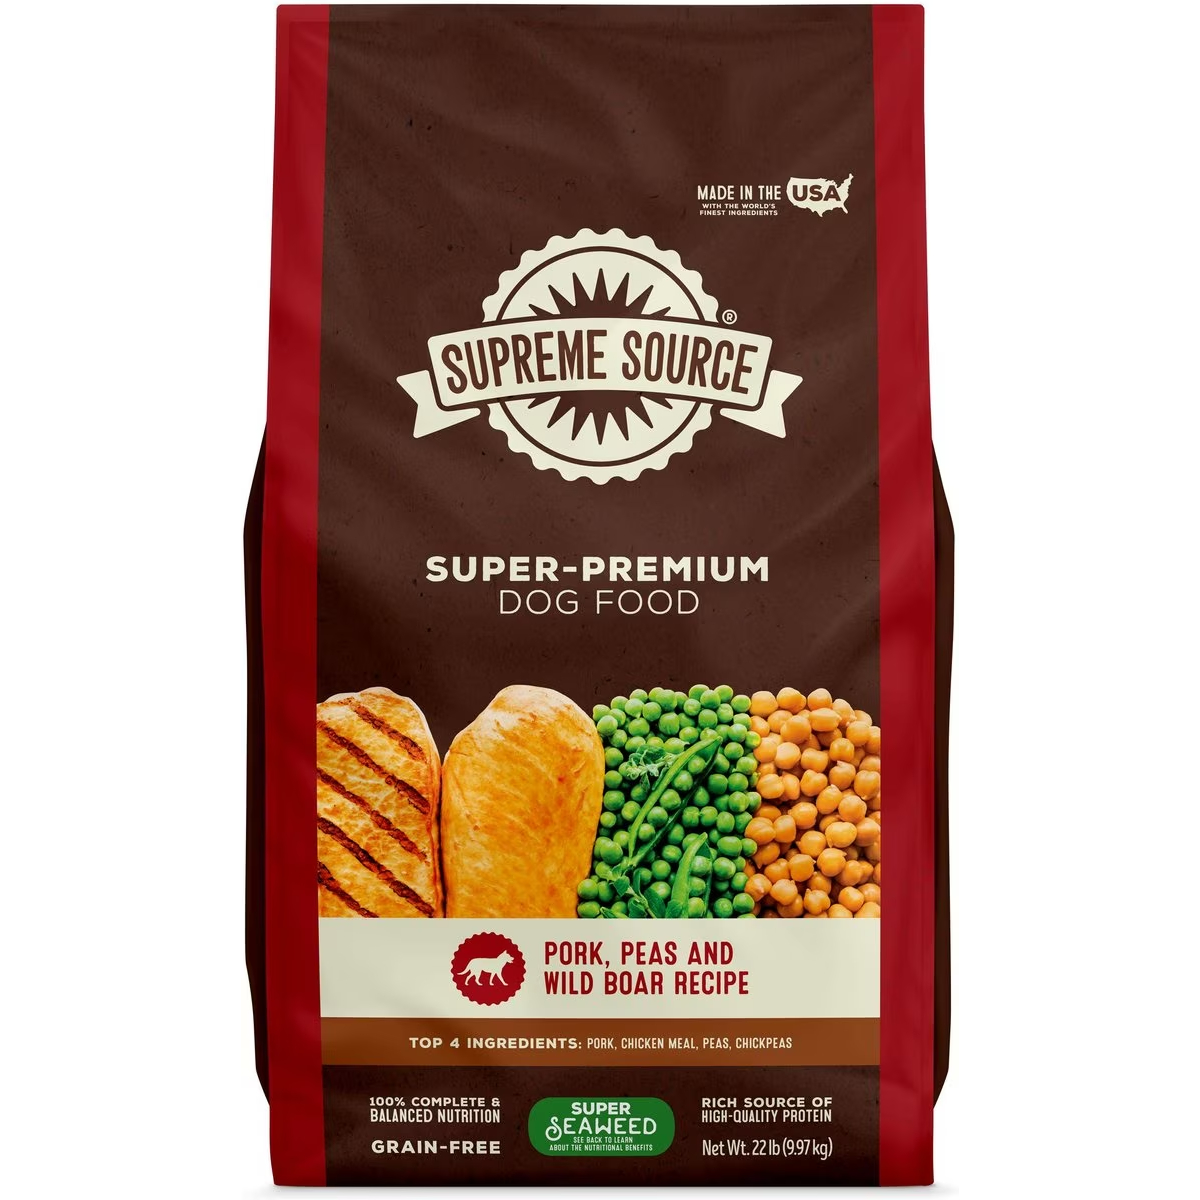 Supreme Source Super-Premium Dog Food